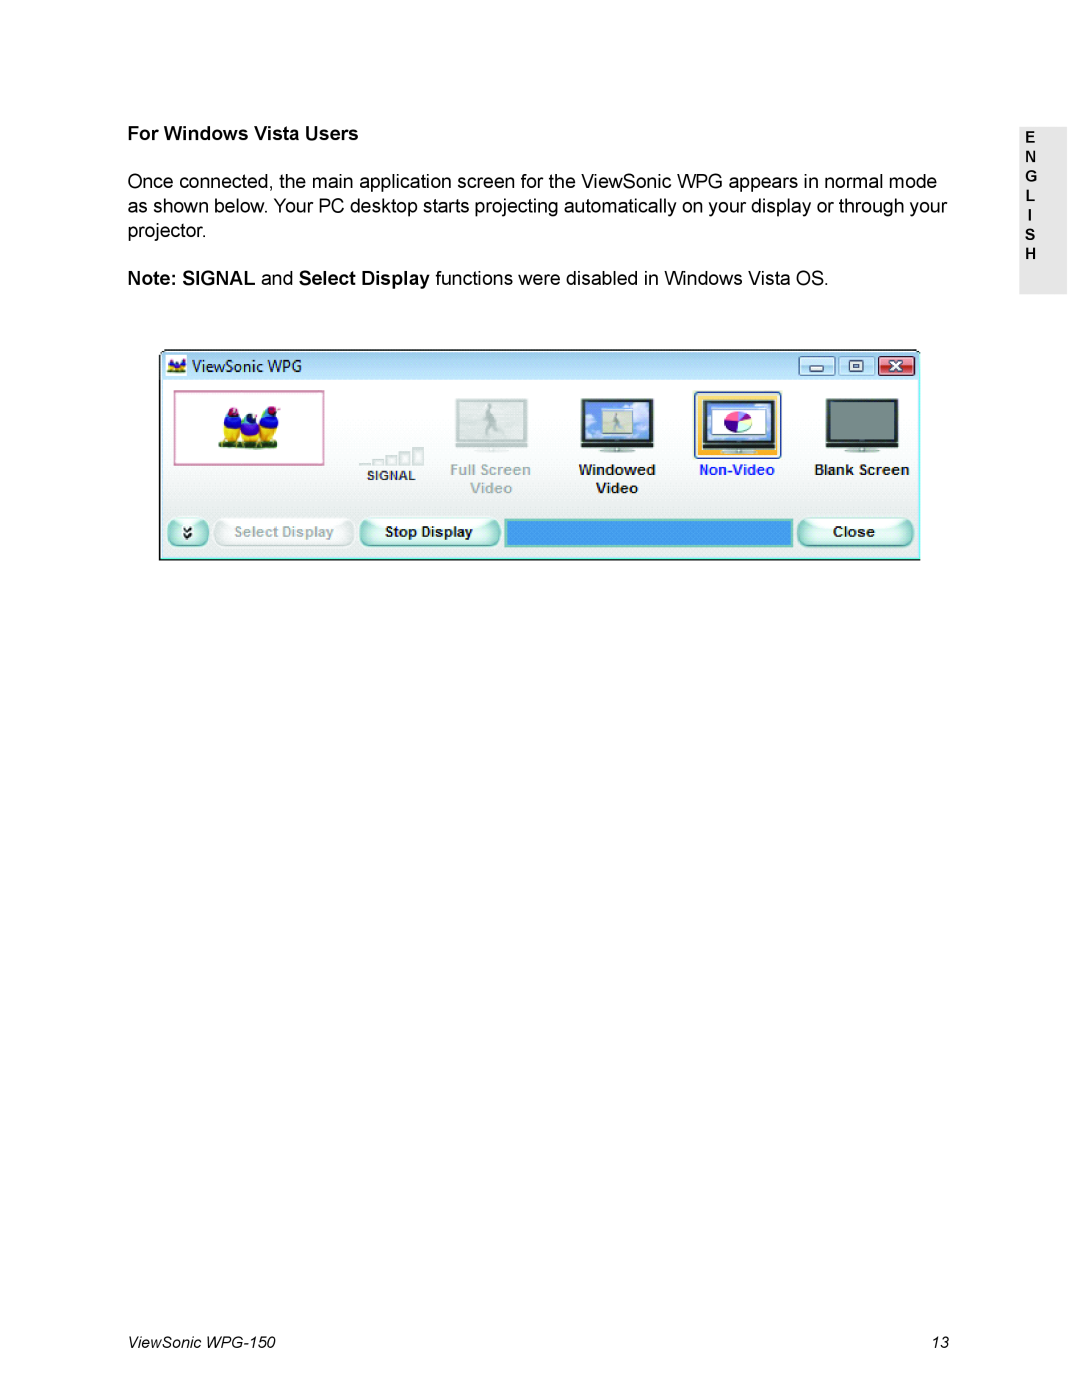 ViewSonic WPG-150 manual For Windows Vista Users, E N G L I S H 